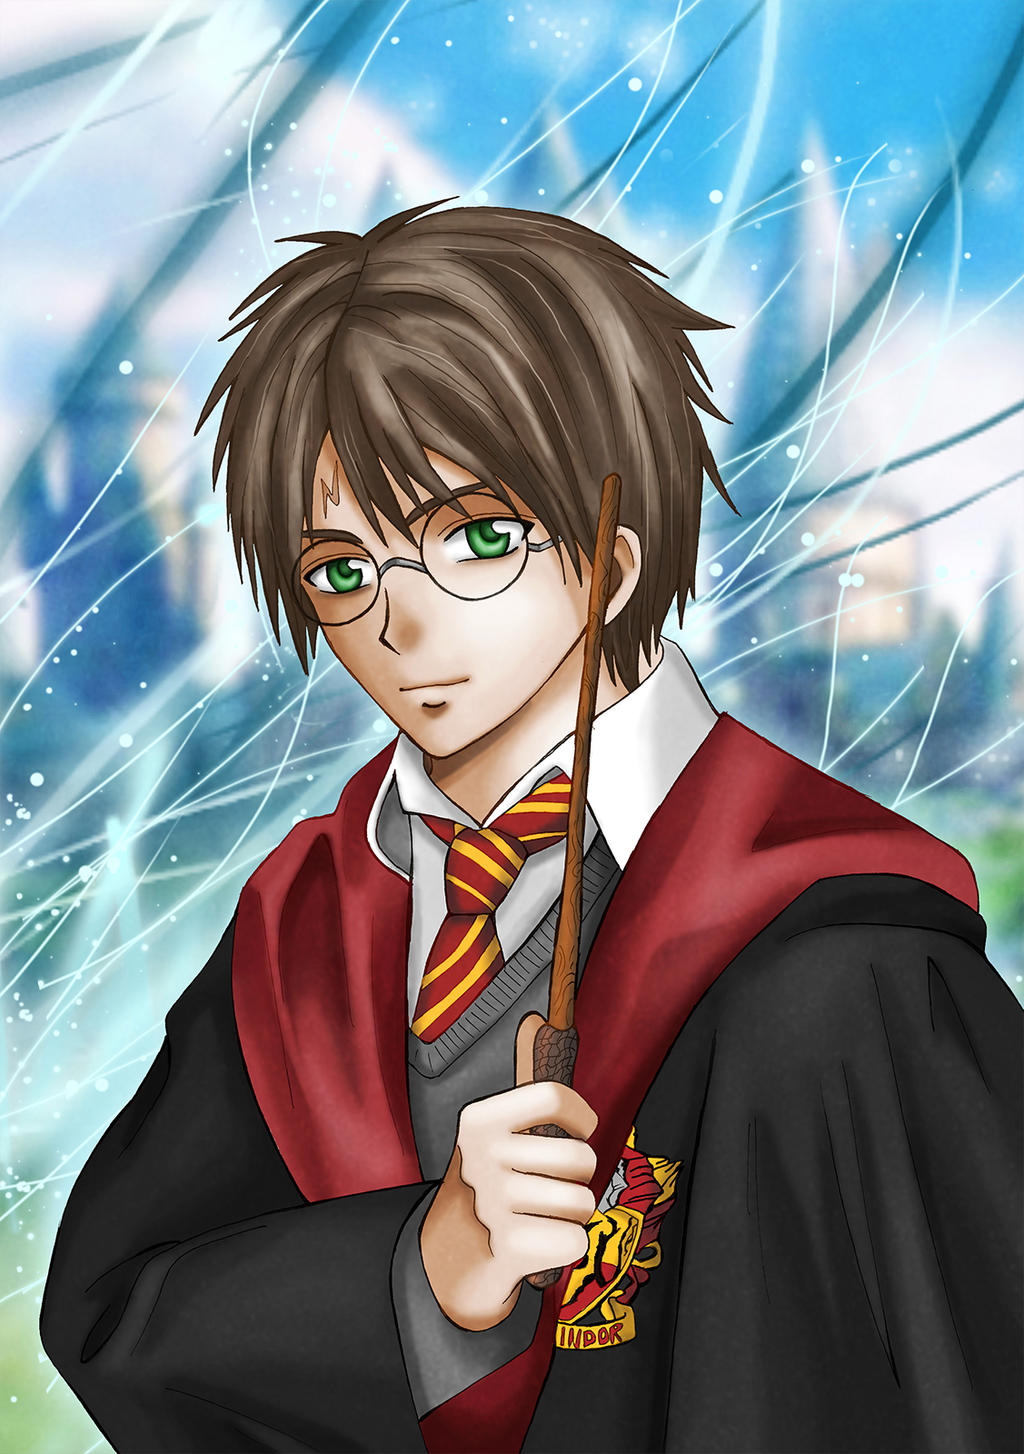 Hình ảnh về Harry Potter anime  Harry Potter 1  Wattpad